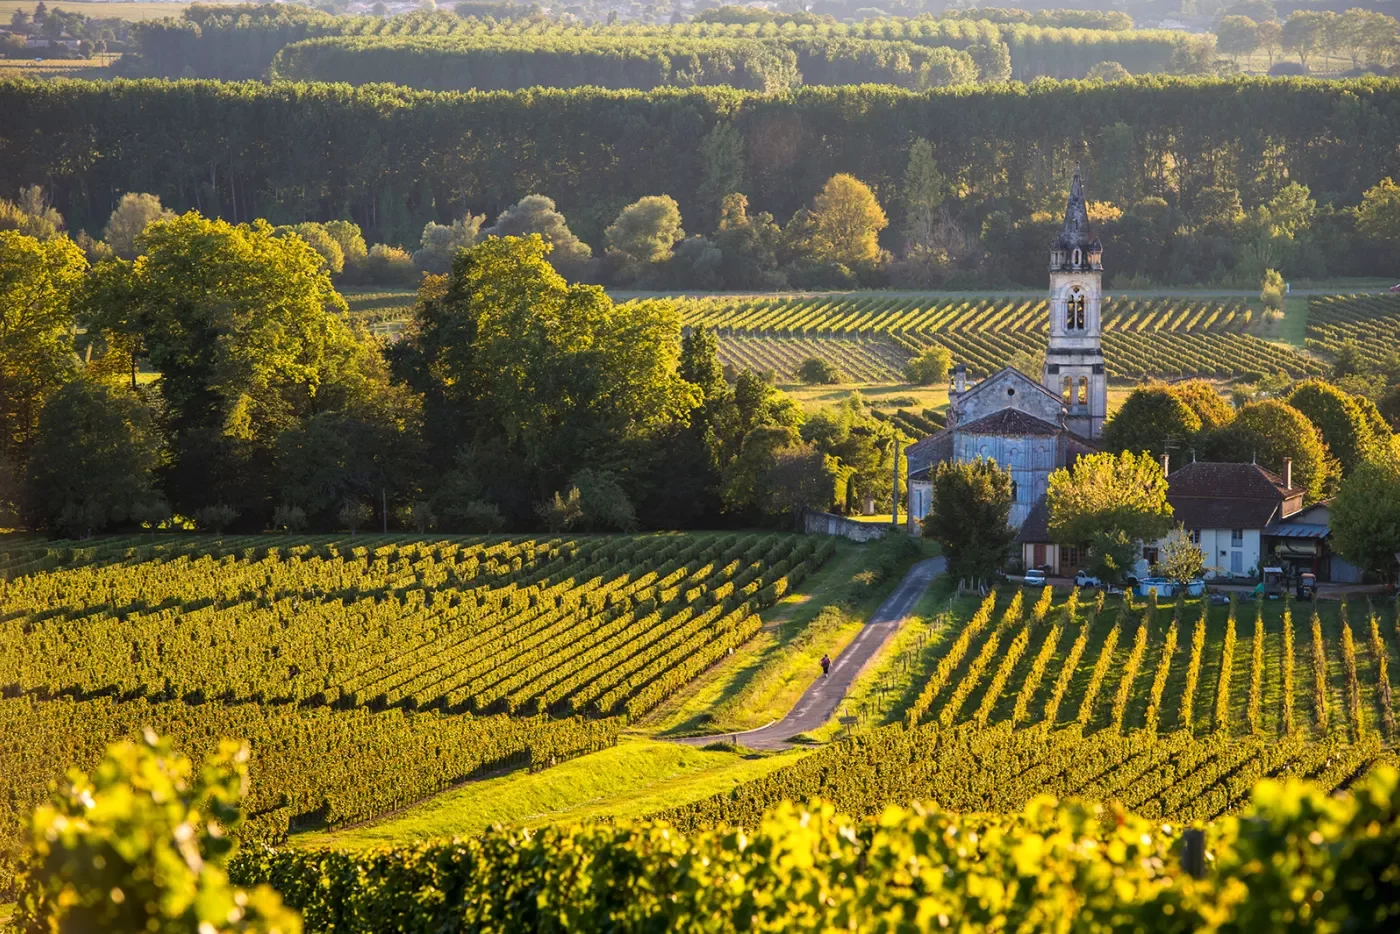 Landscape-Vineyard in South West of France-Sauternes-Loupiac